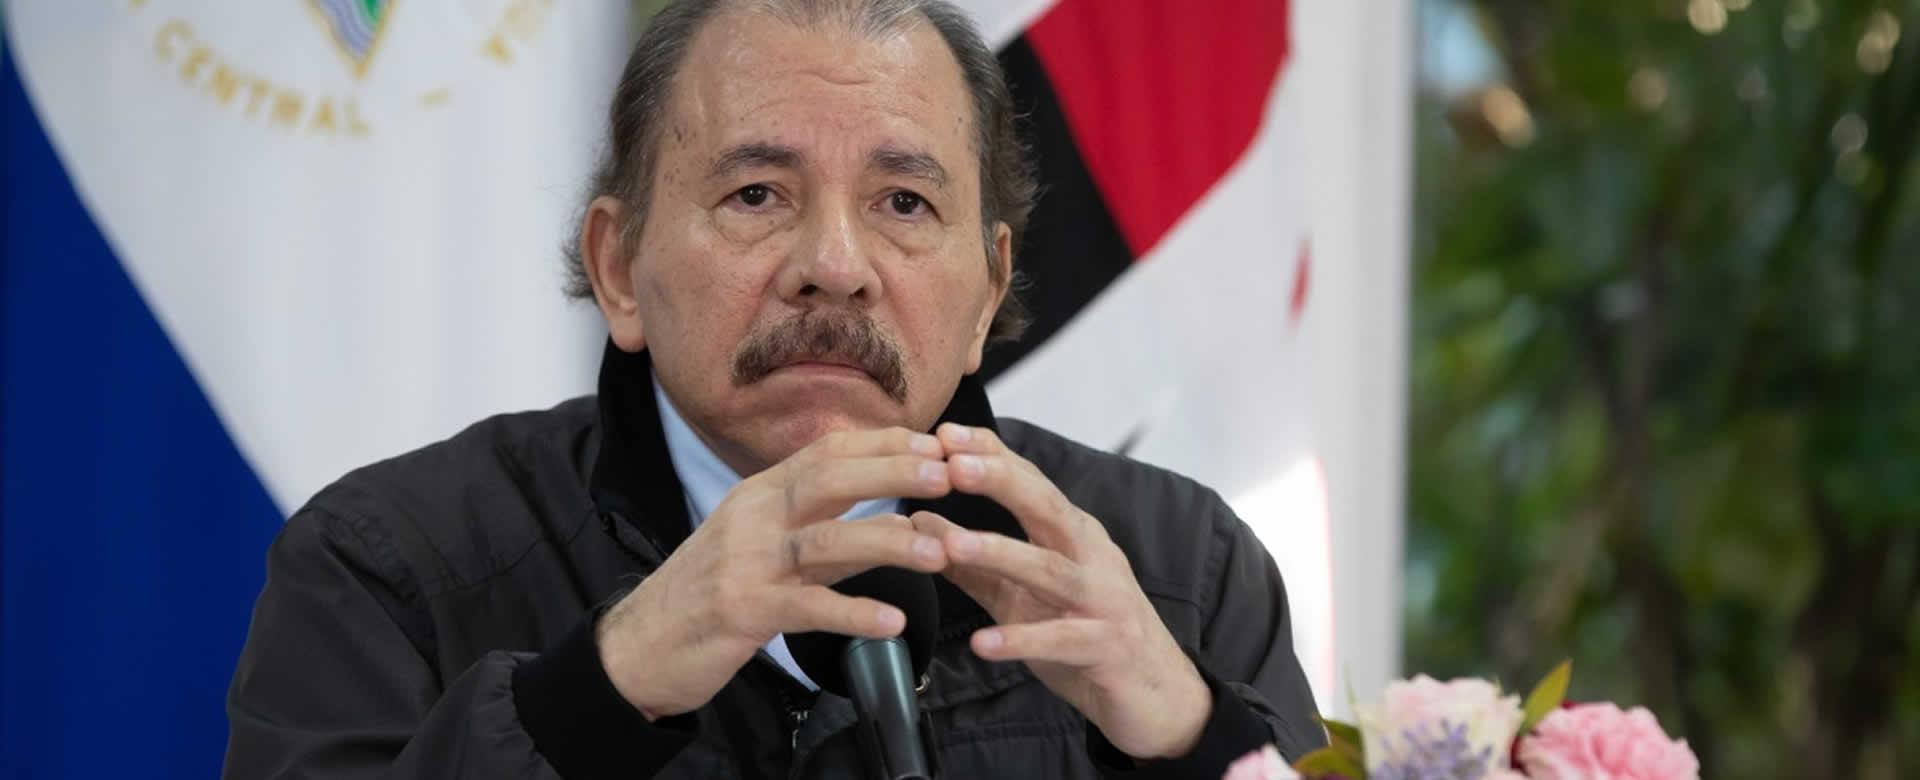 Presidente Comandante Daniel Ortega participa en la Cumbre Virutal de los MNOAL